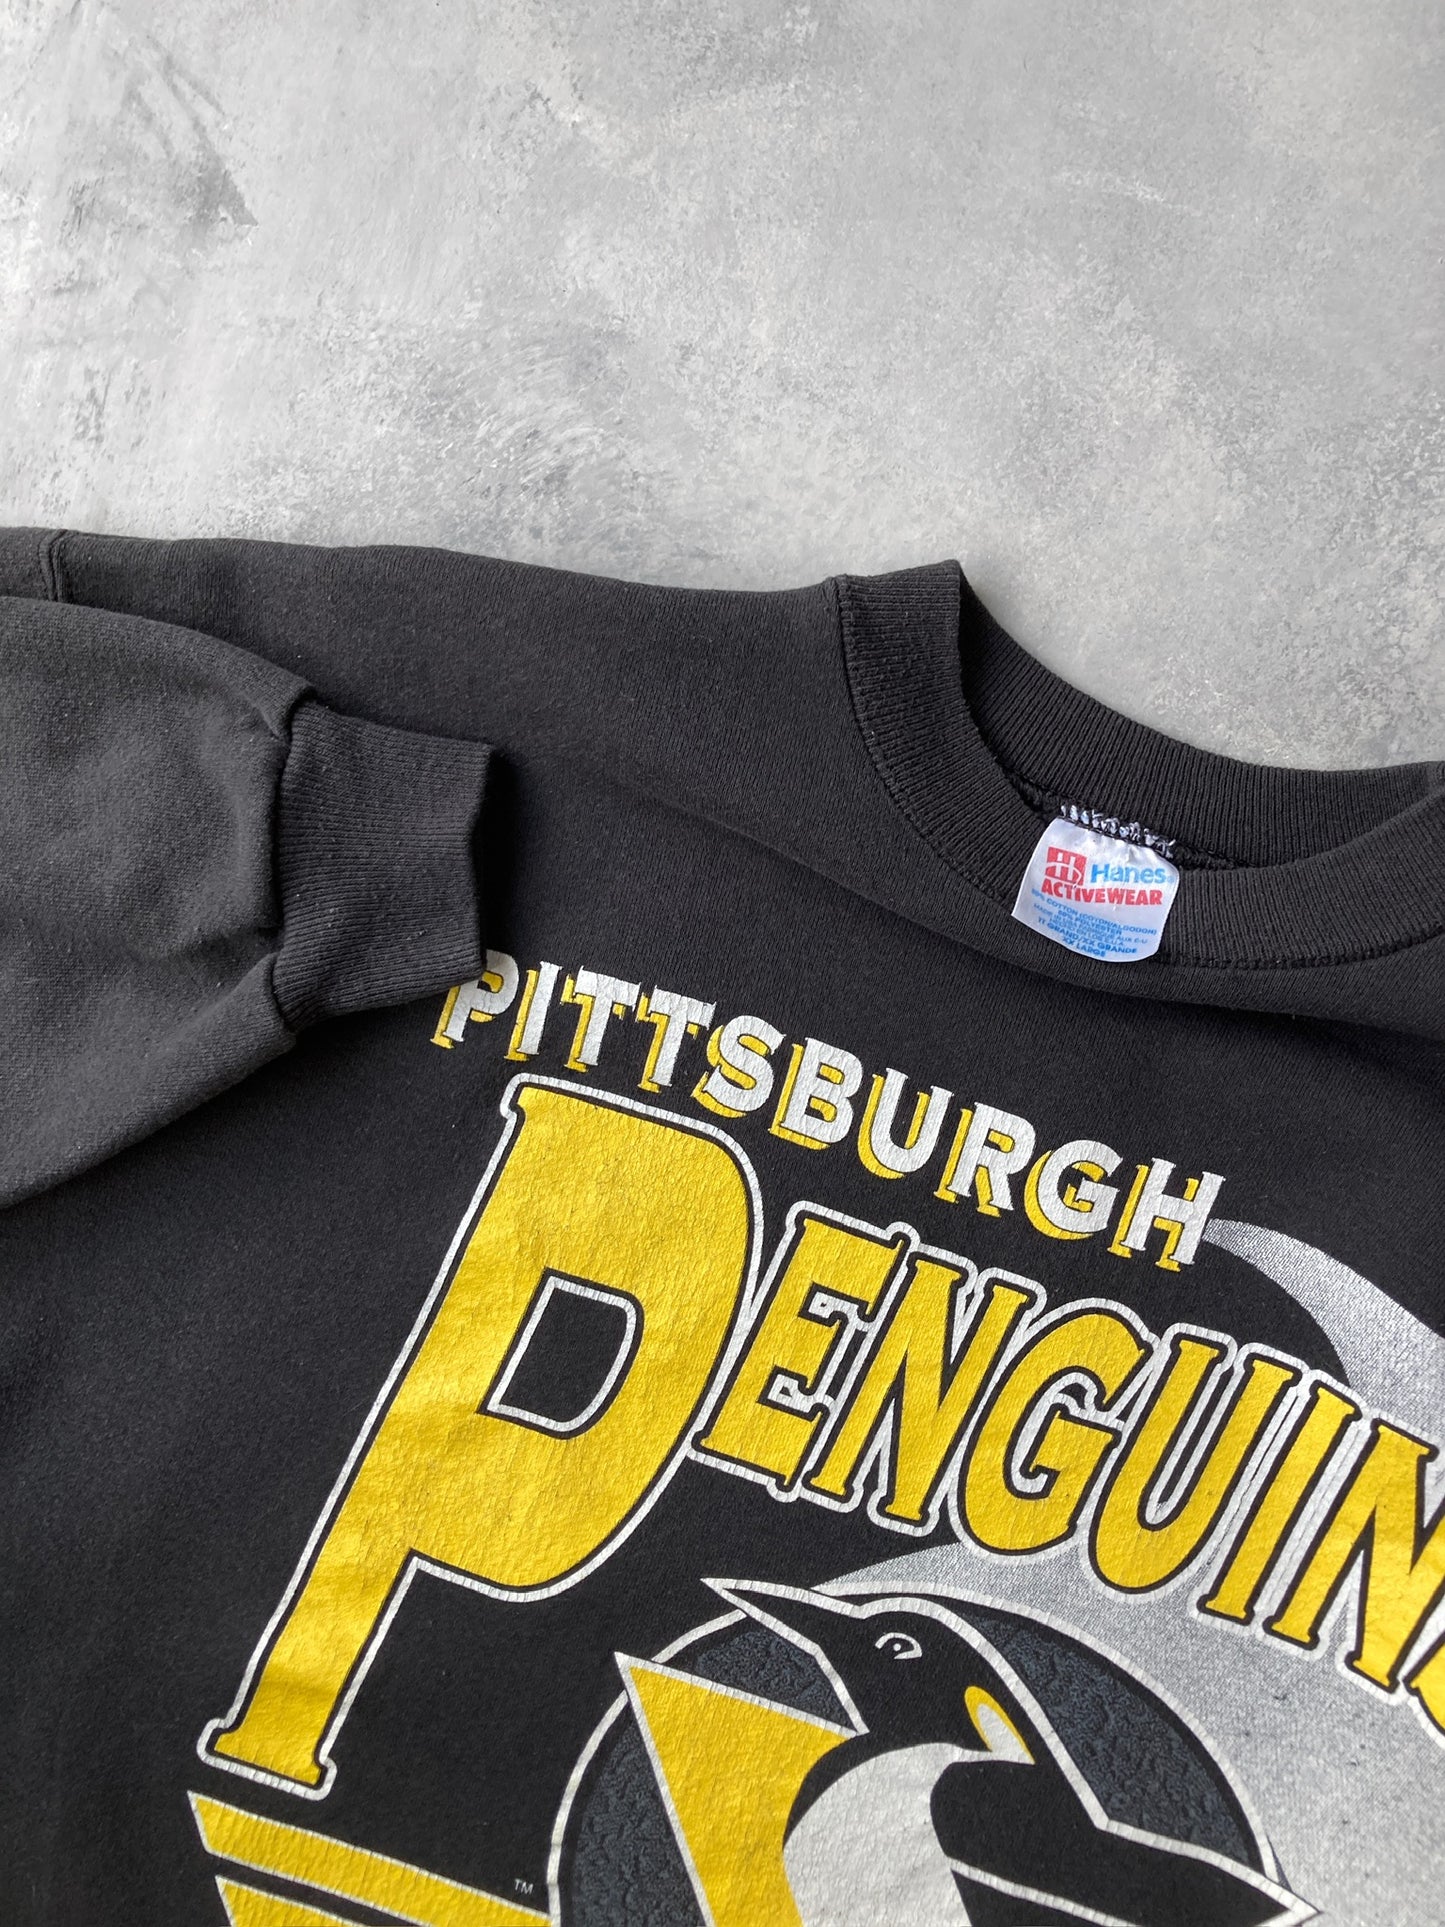 Pittsburgh Penguins Sweatshirt 90's - XL